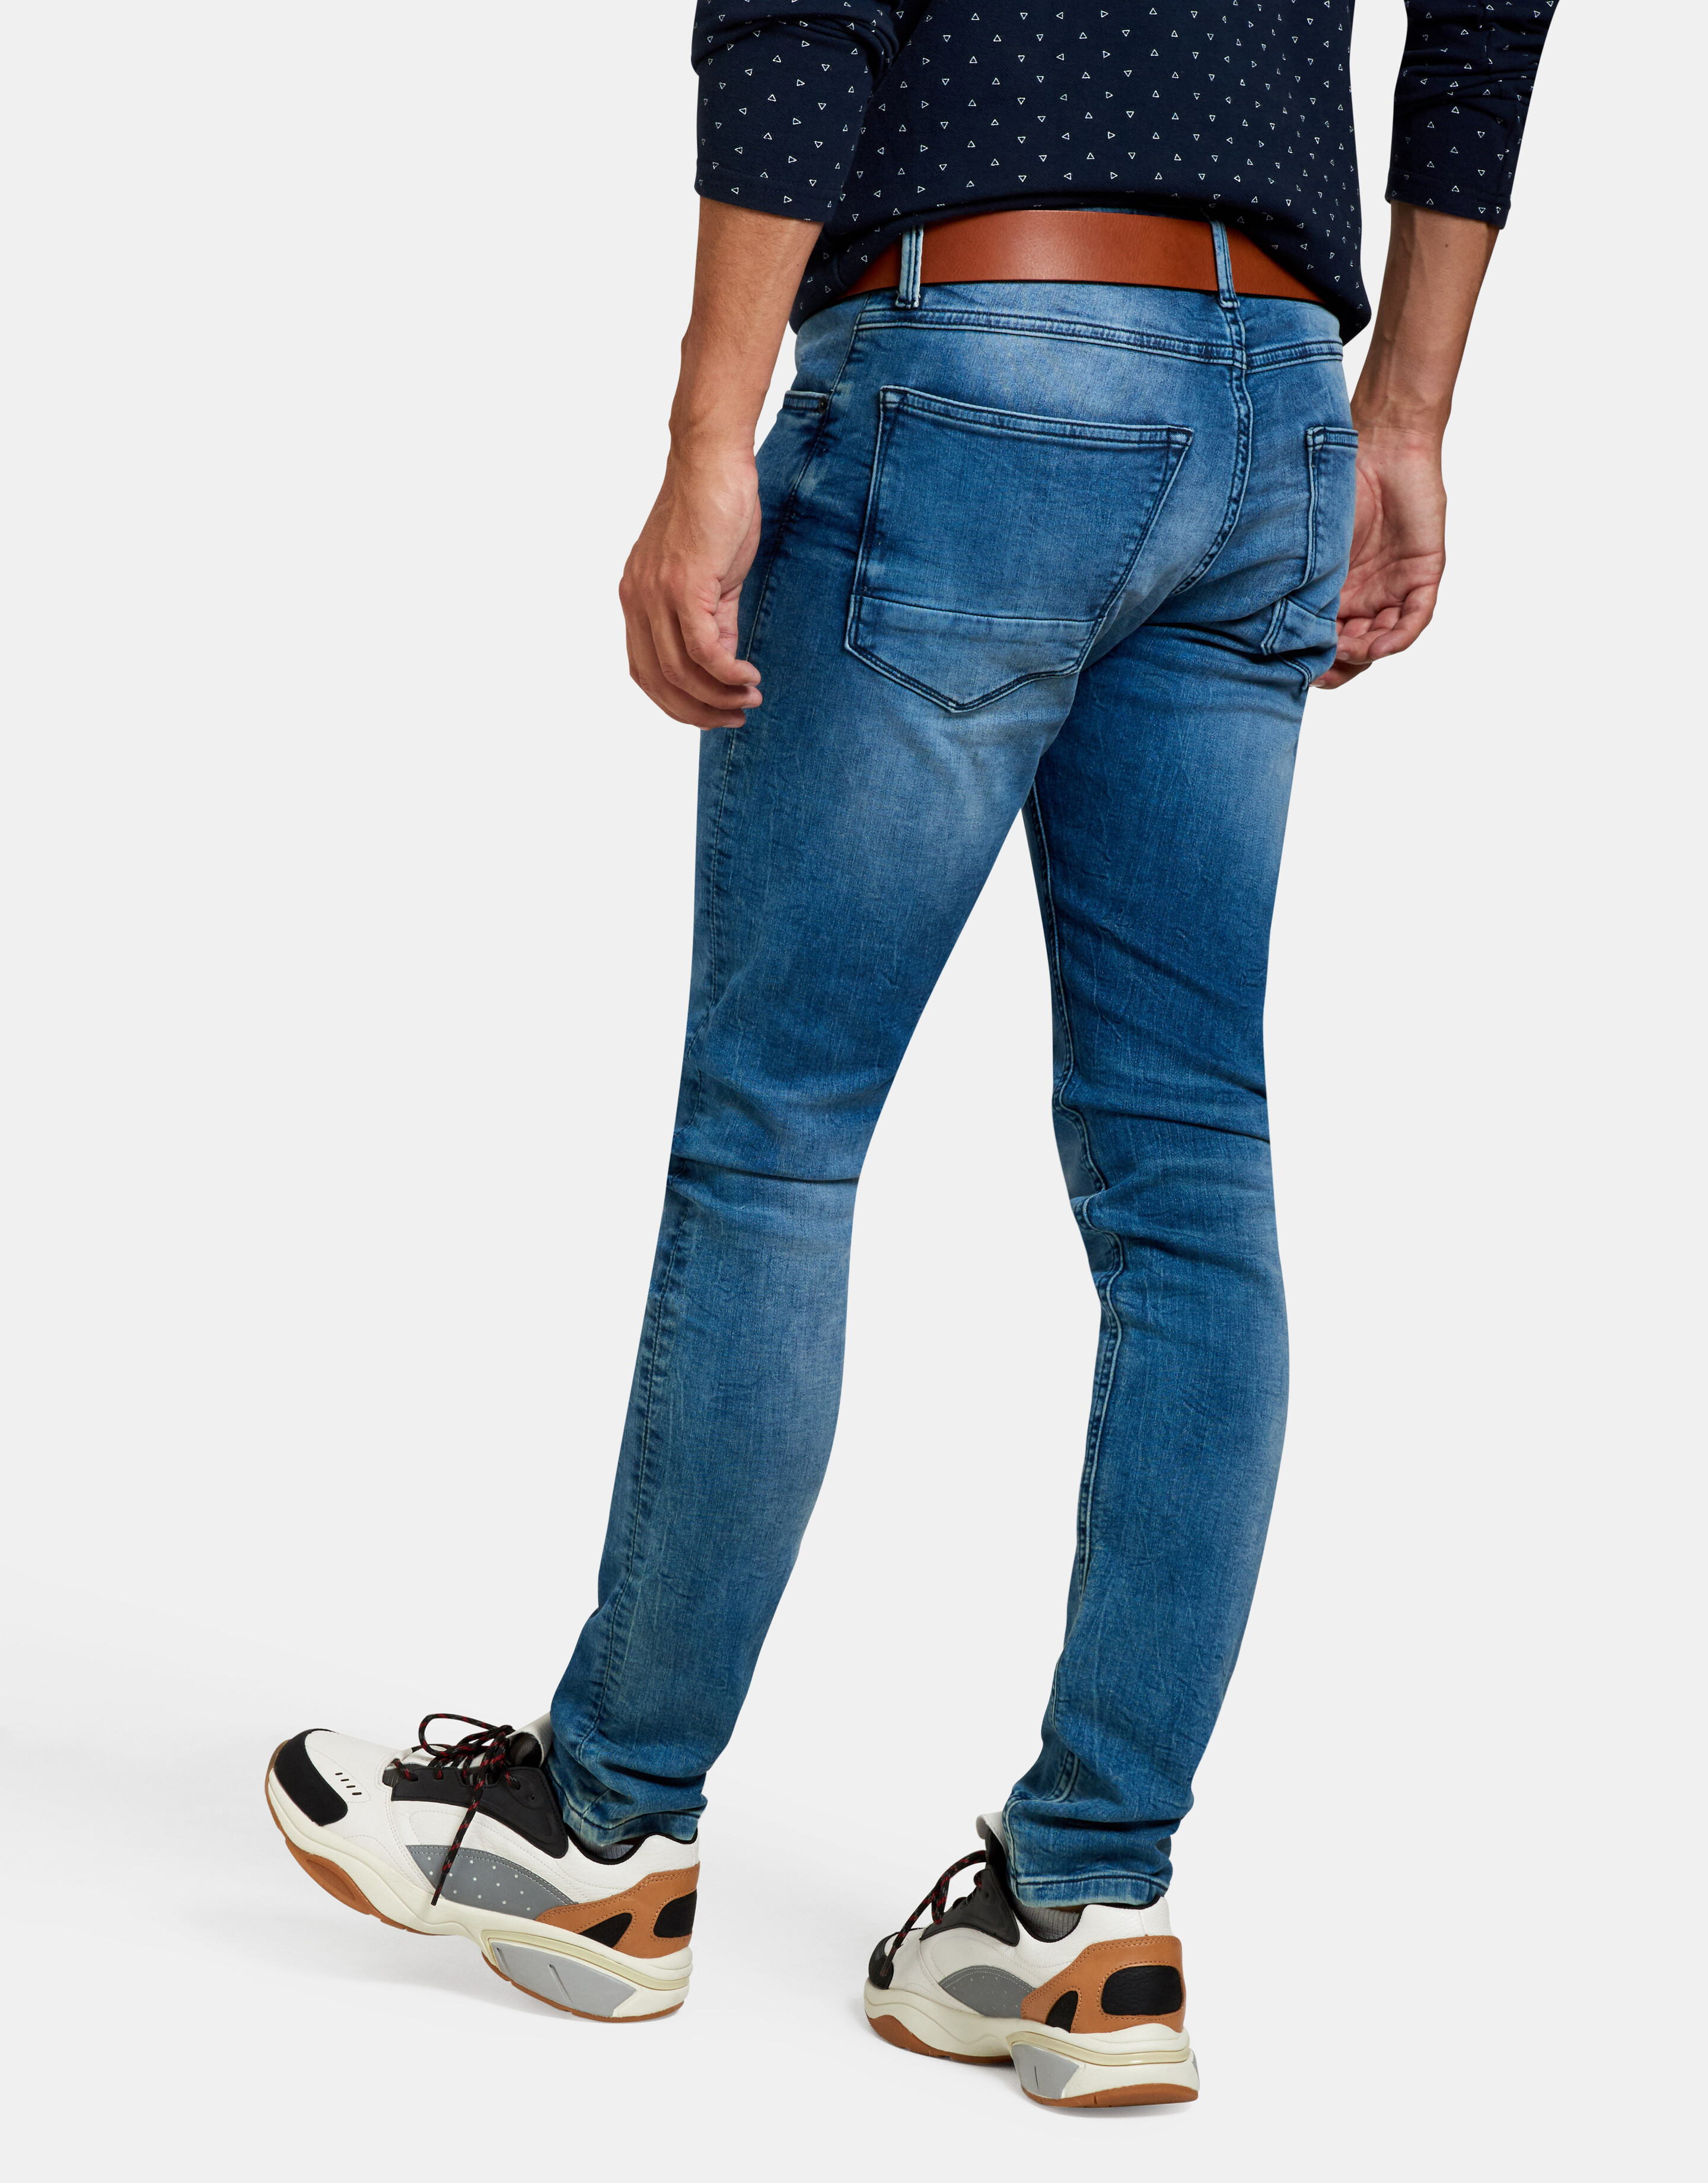 Leroy Skinny Gym Jeans L32 Refill